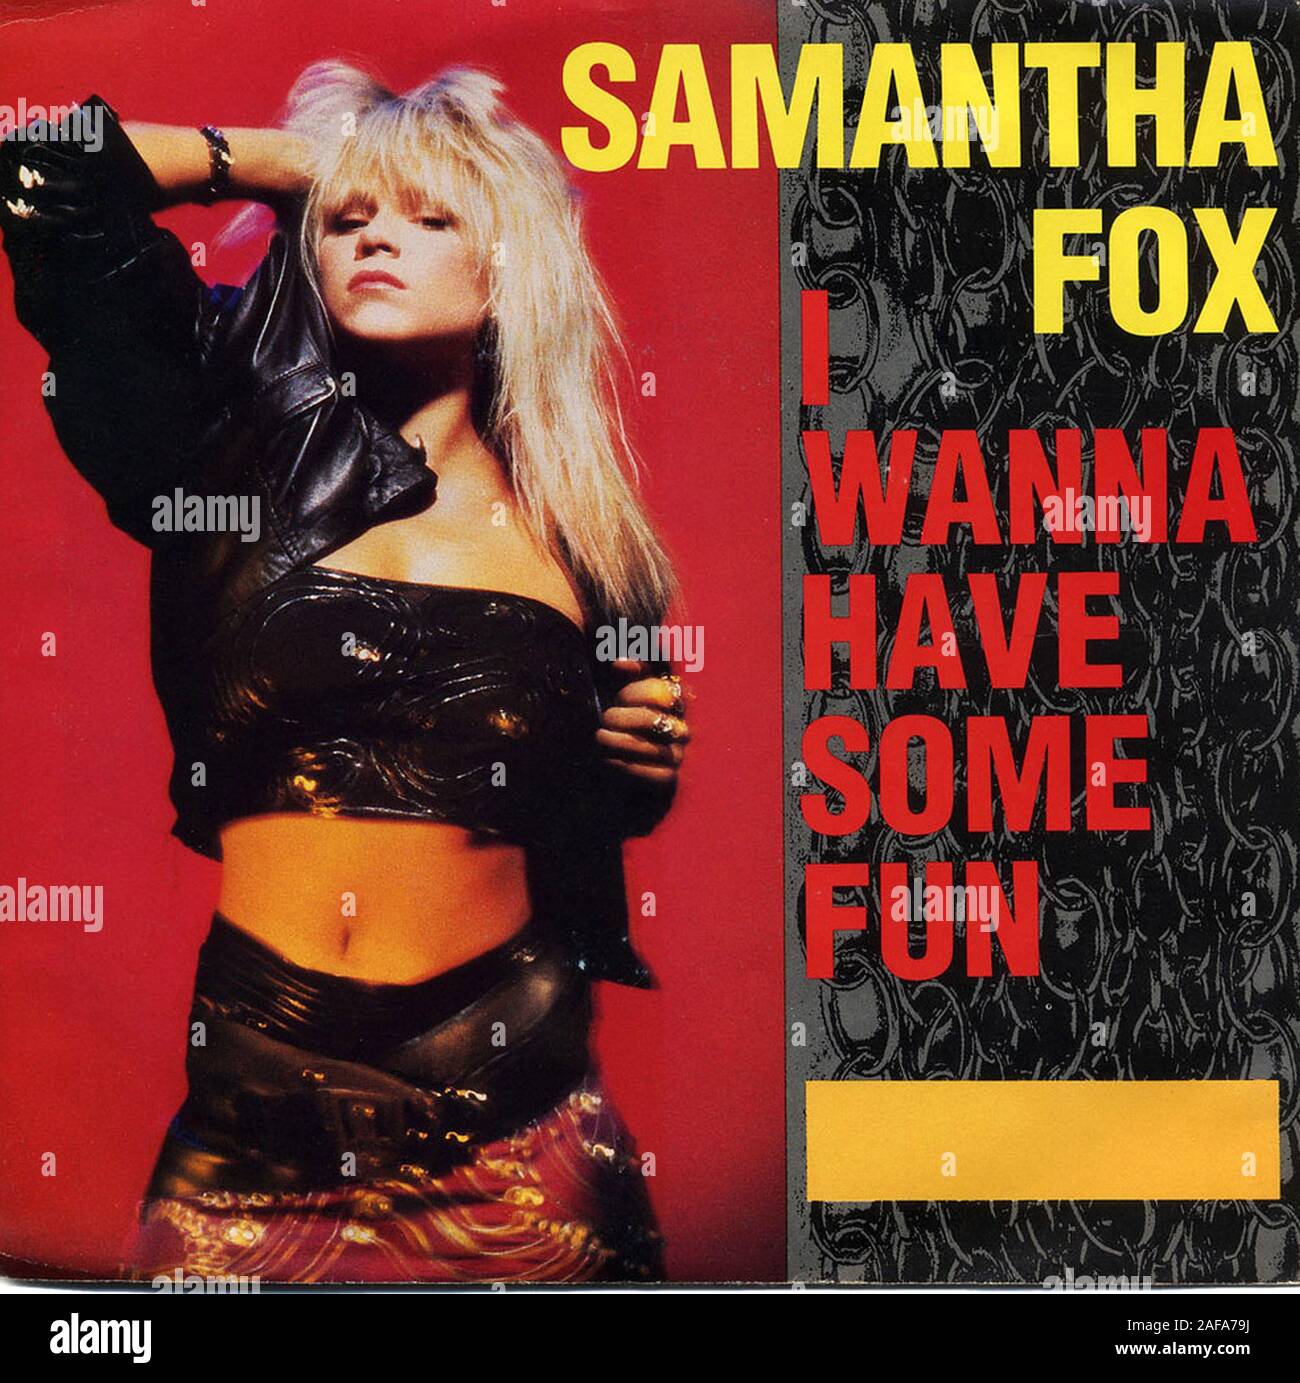 Samantha fox pictures